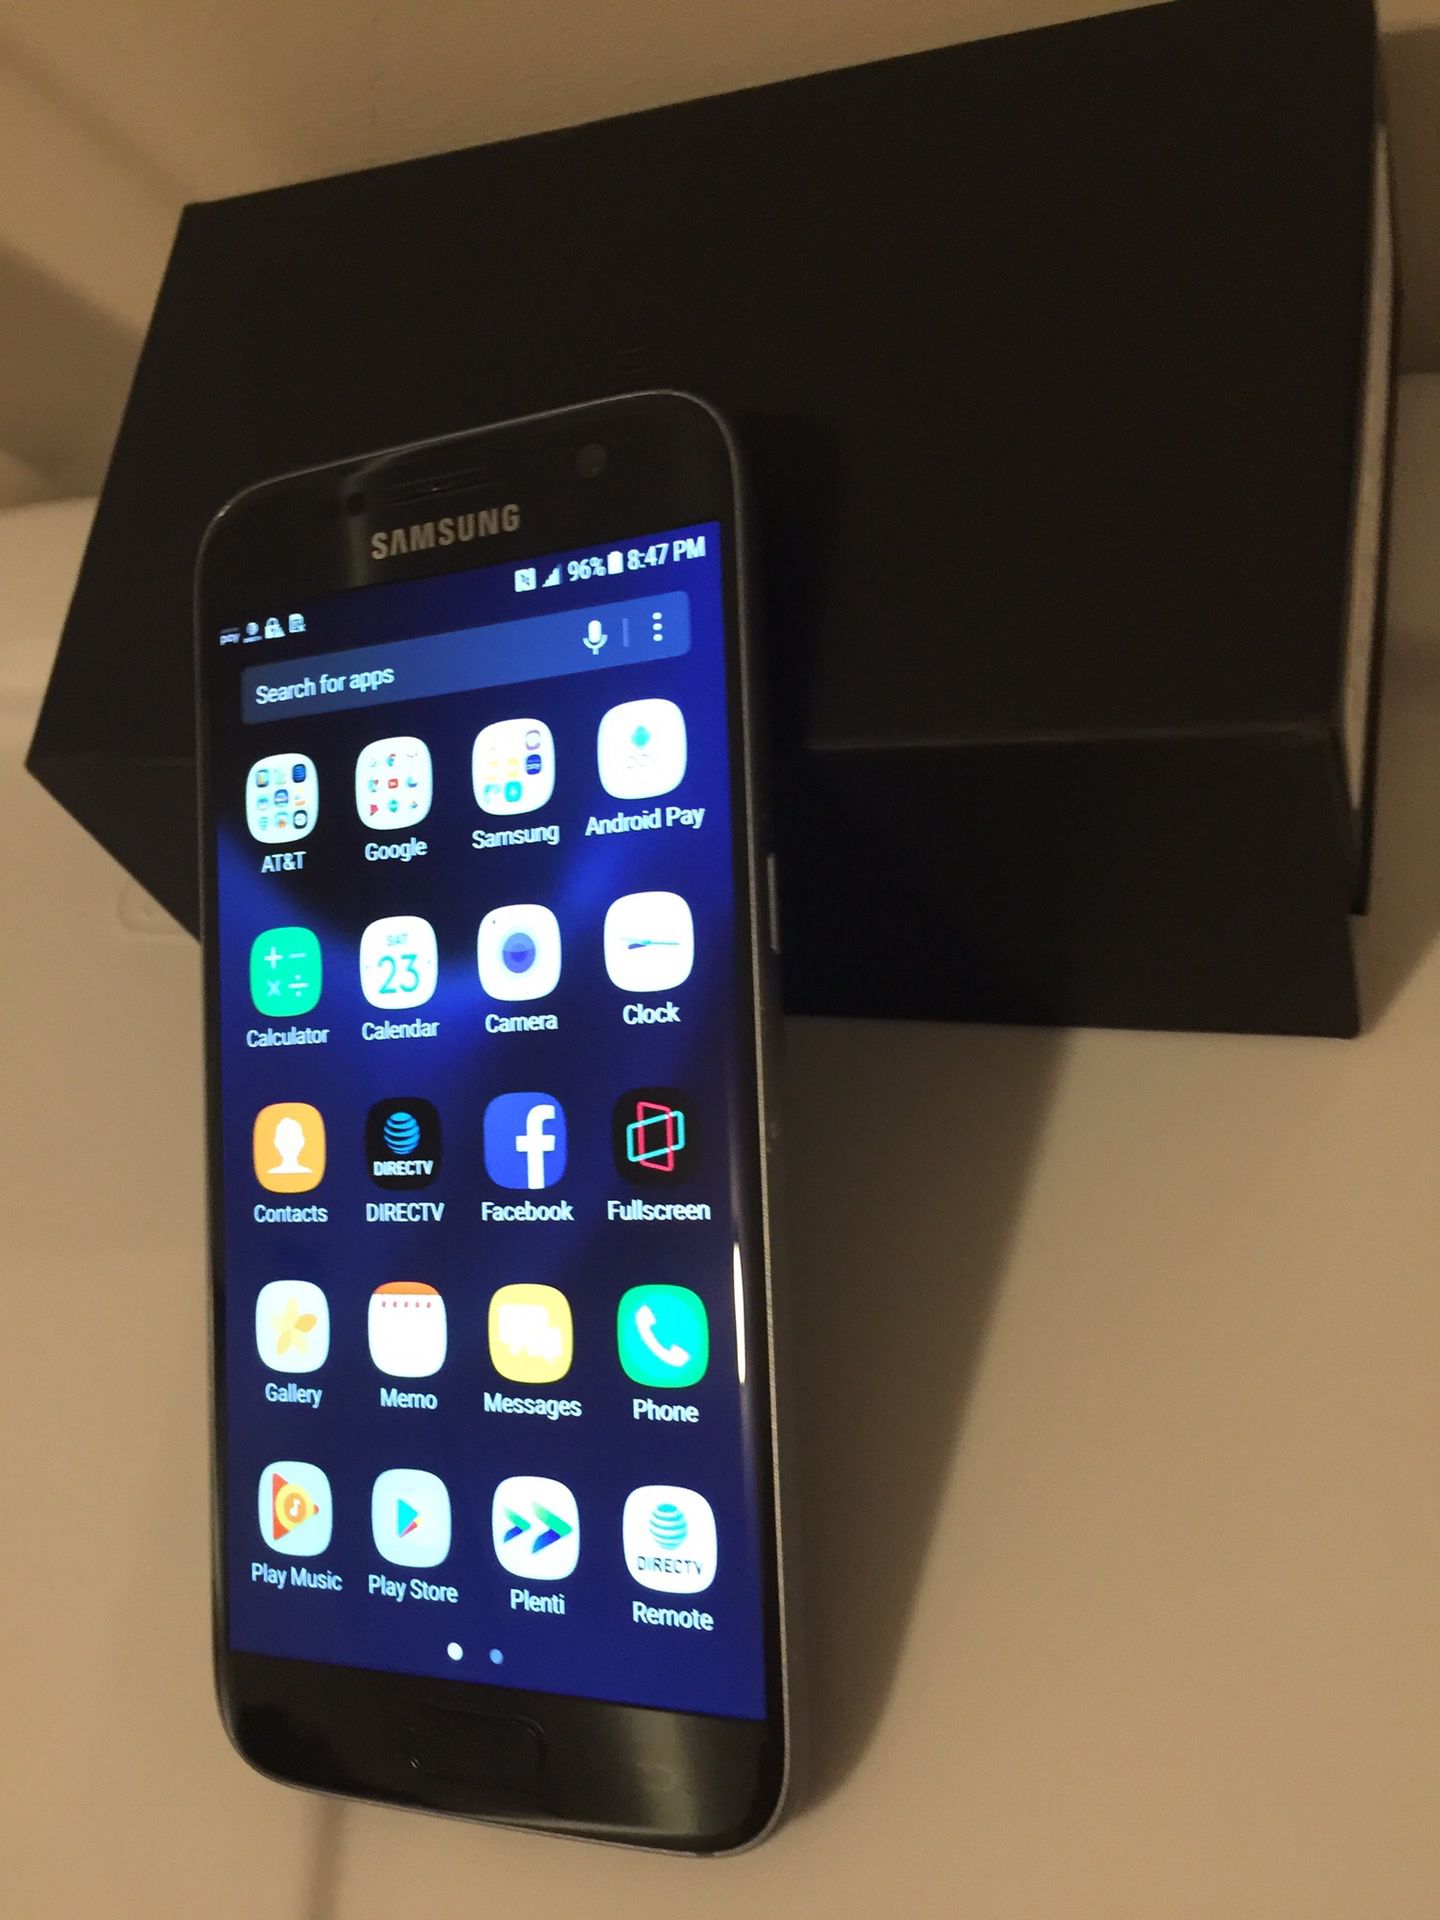 Samsung Galaxy S7,32 GB, excellent condition factory unlocked